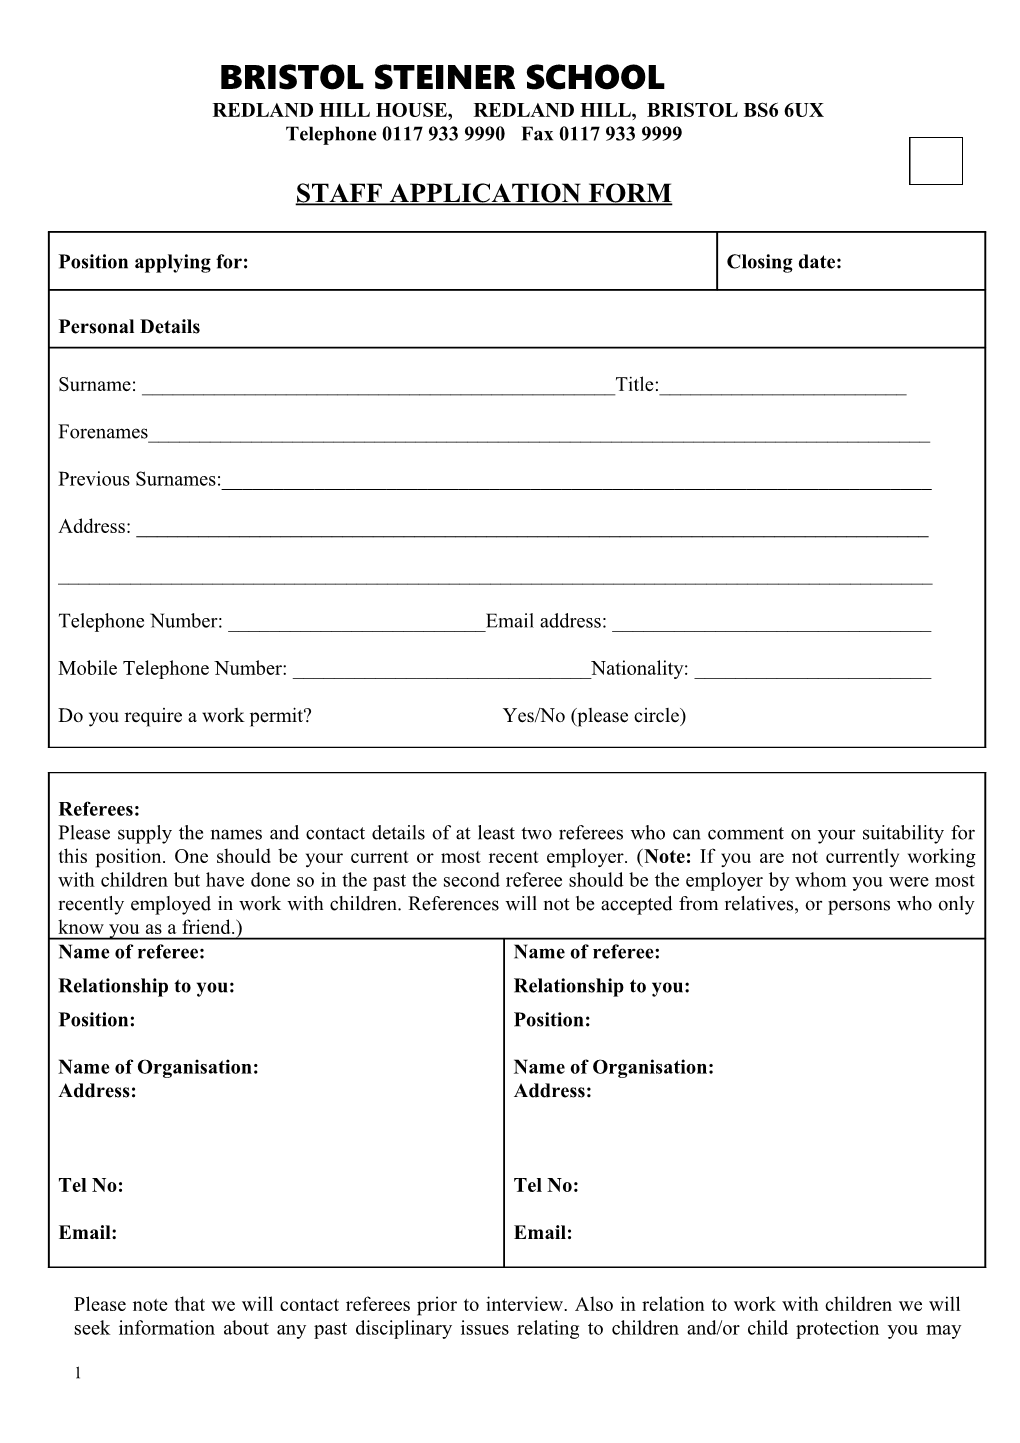 Staff Application Form.Wpd